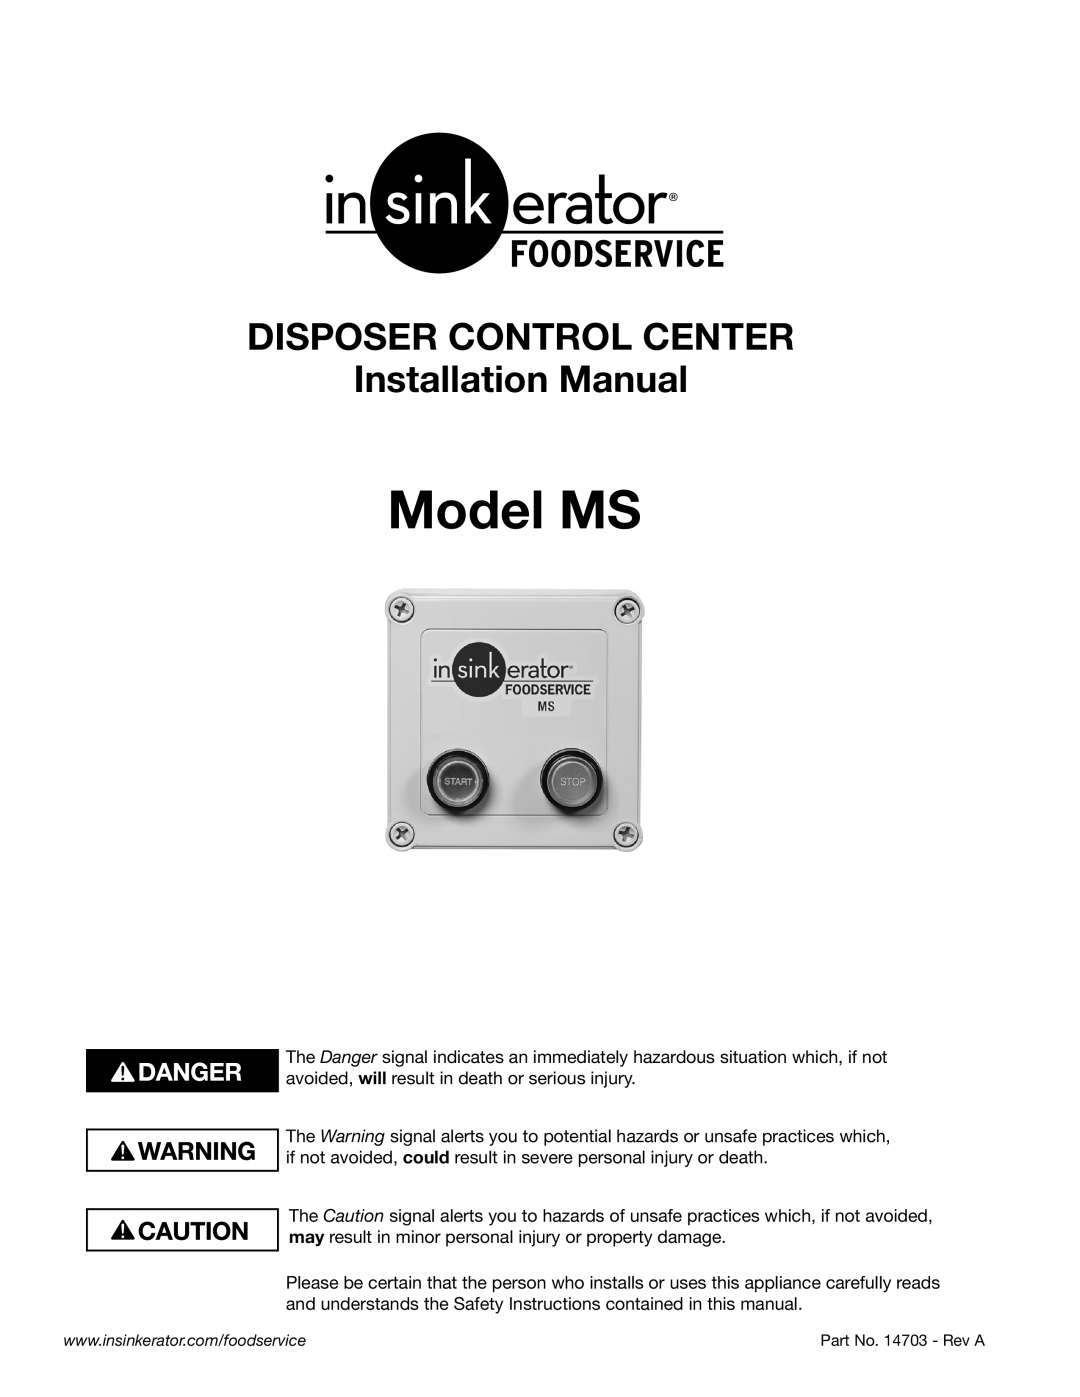 InSinkErator installation manual Model MS, DISPOSER CONTROL CENTER Installation Manual 